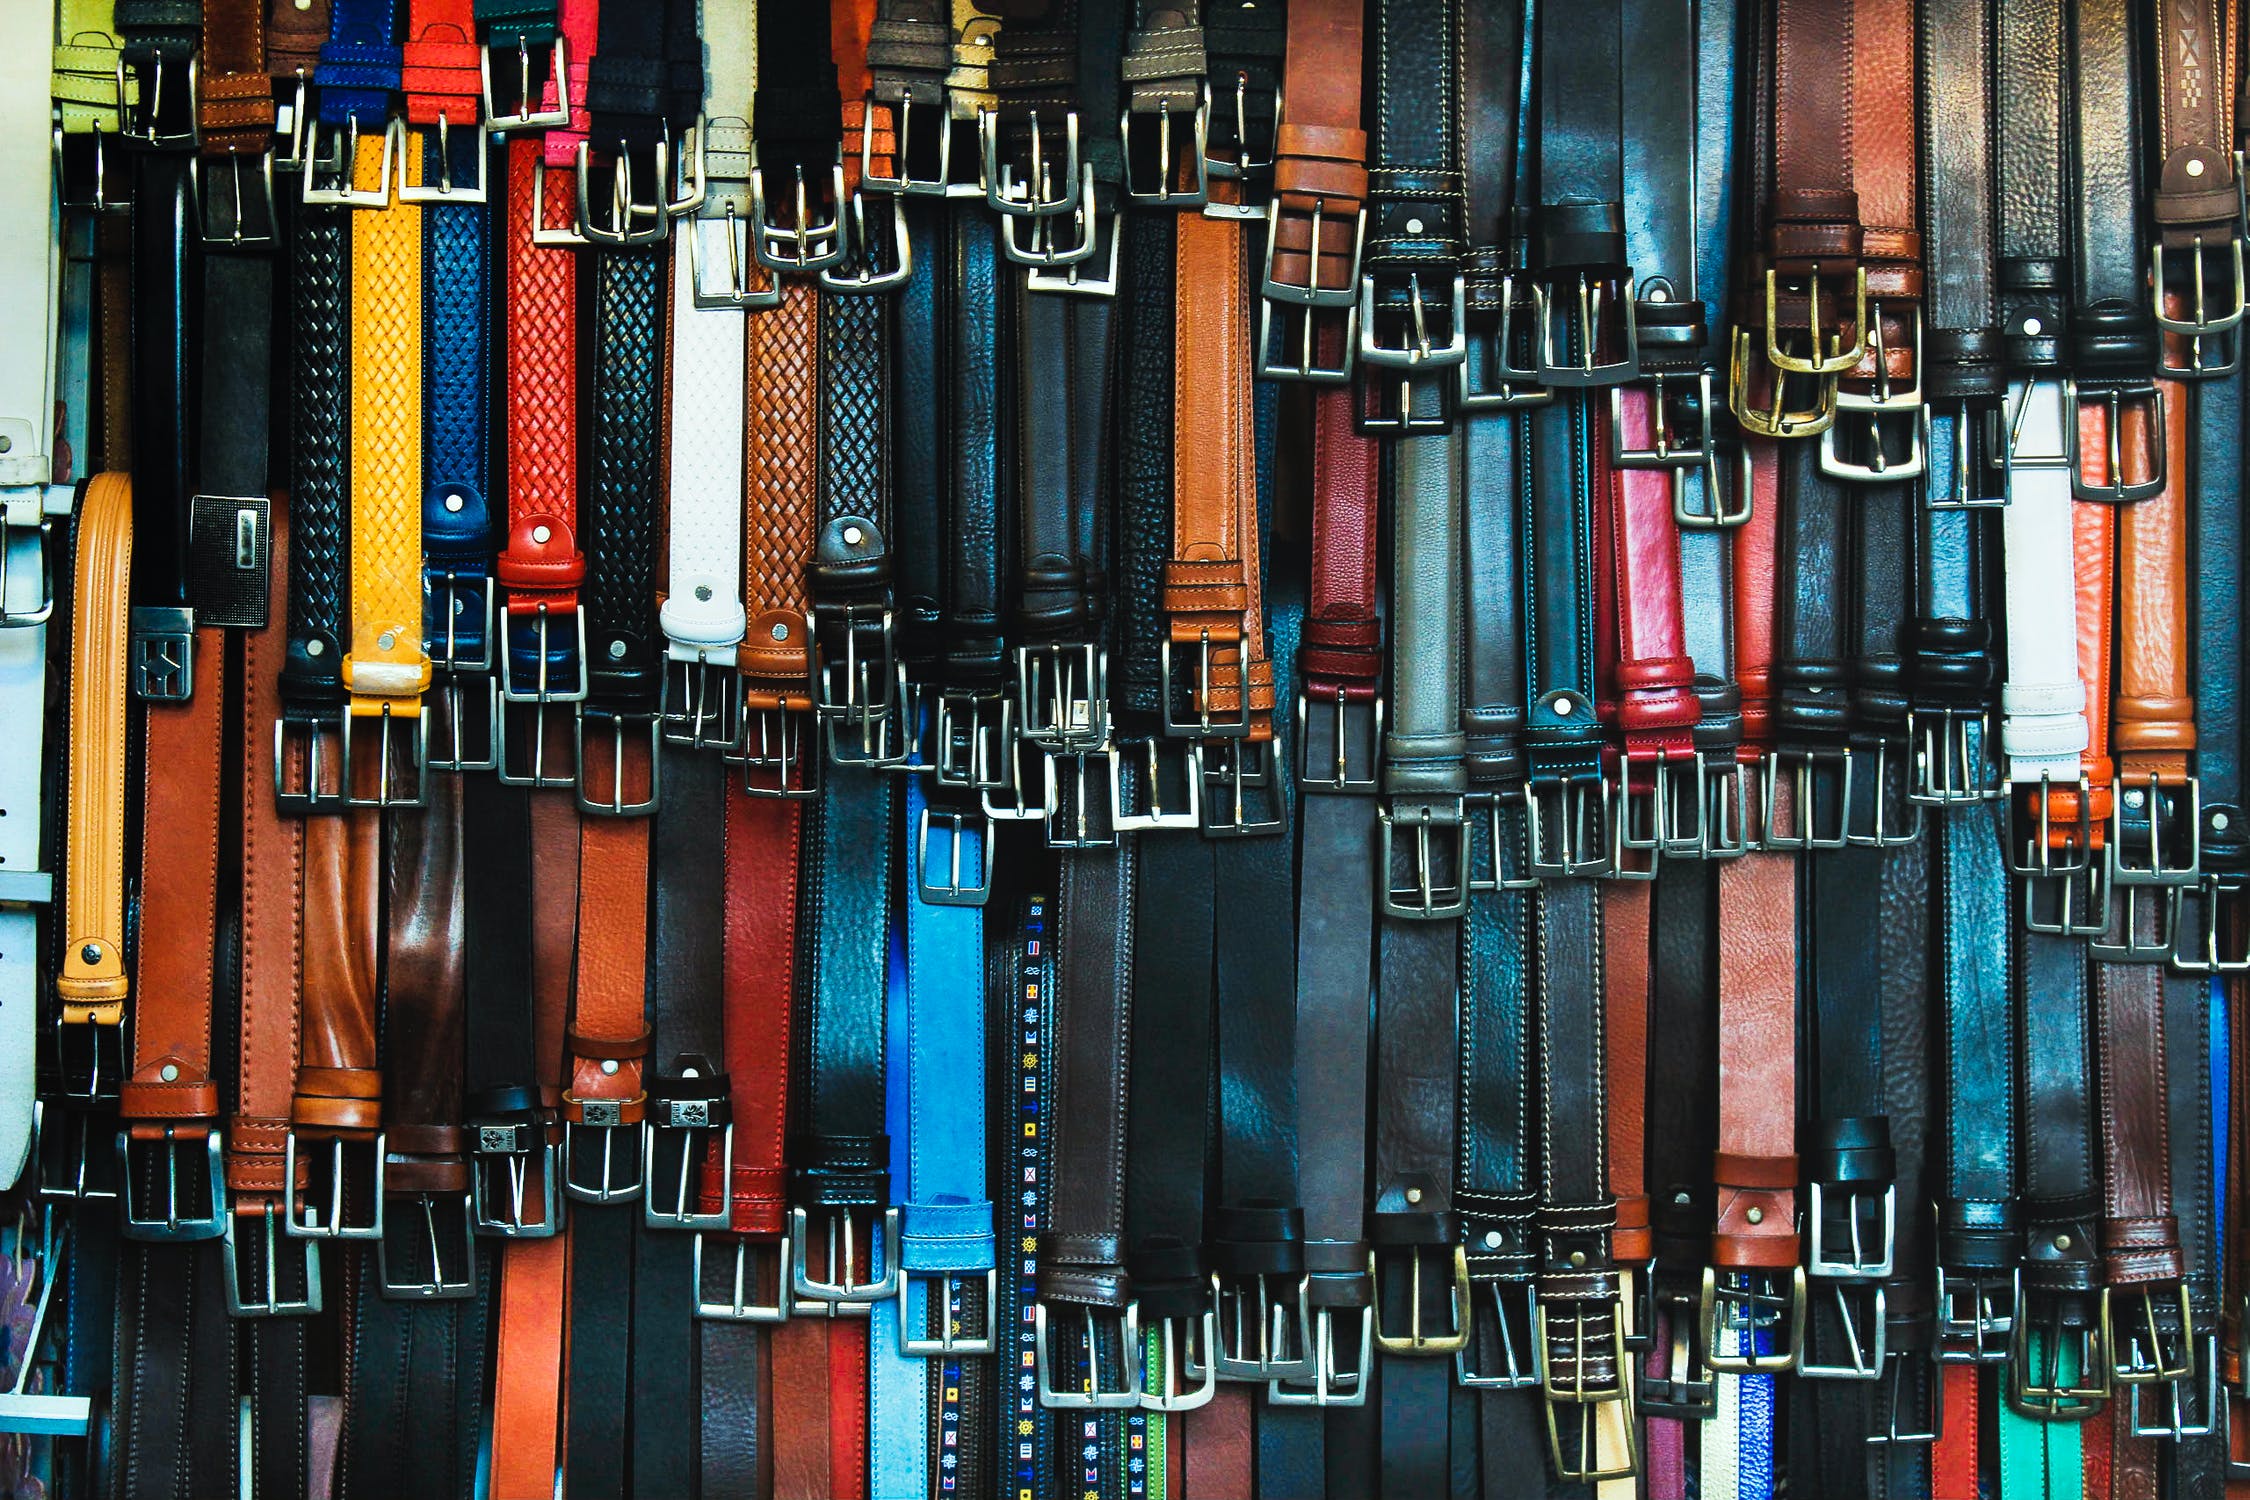 Why should I choose a high-tech belt over a traditional belt